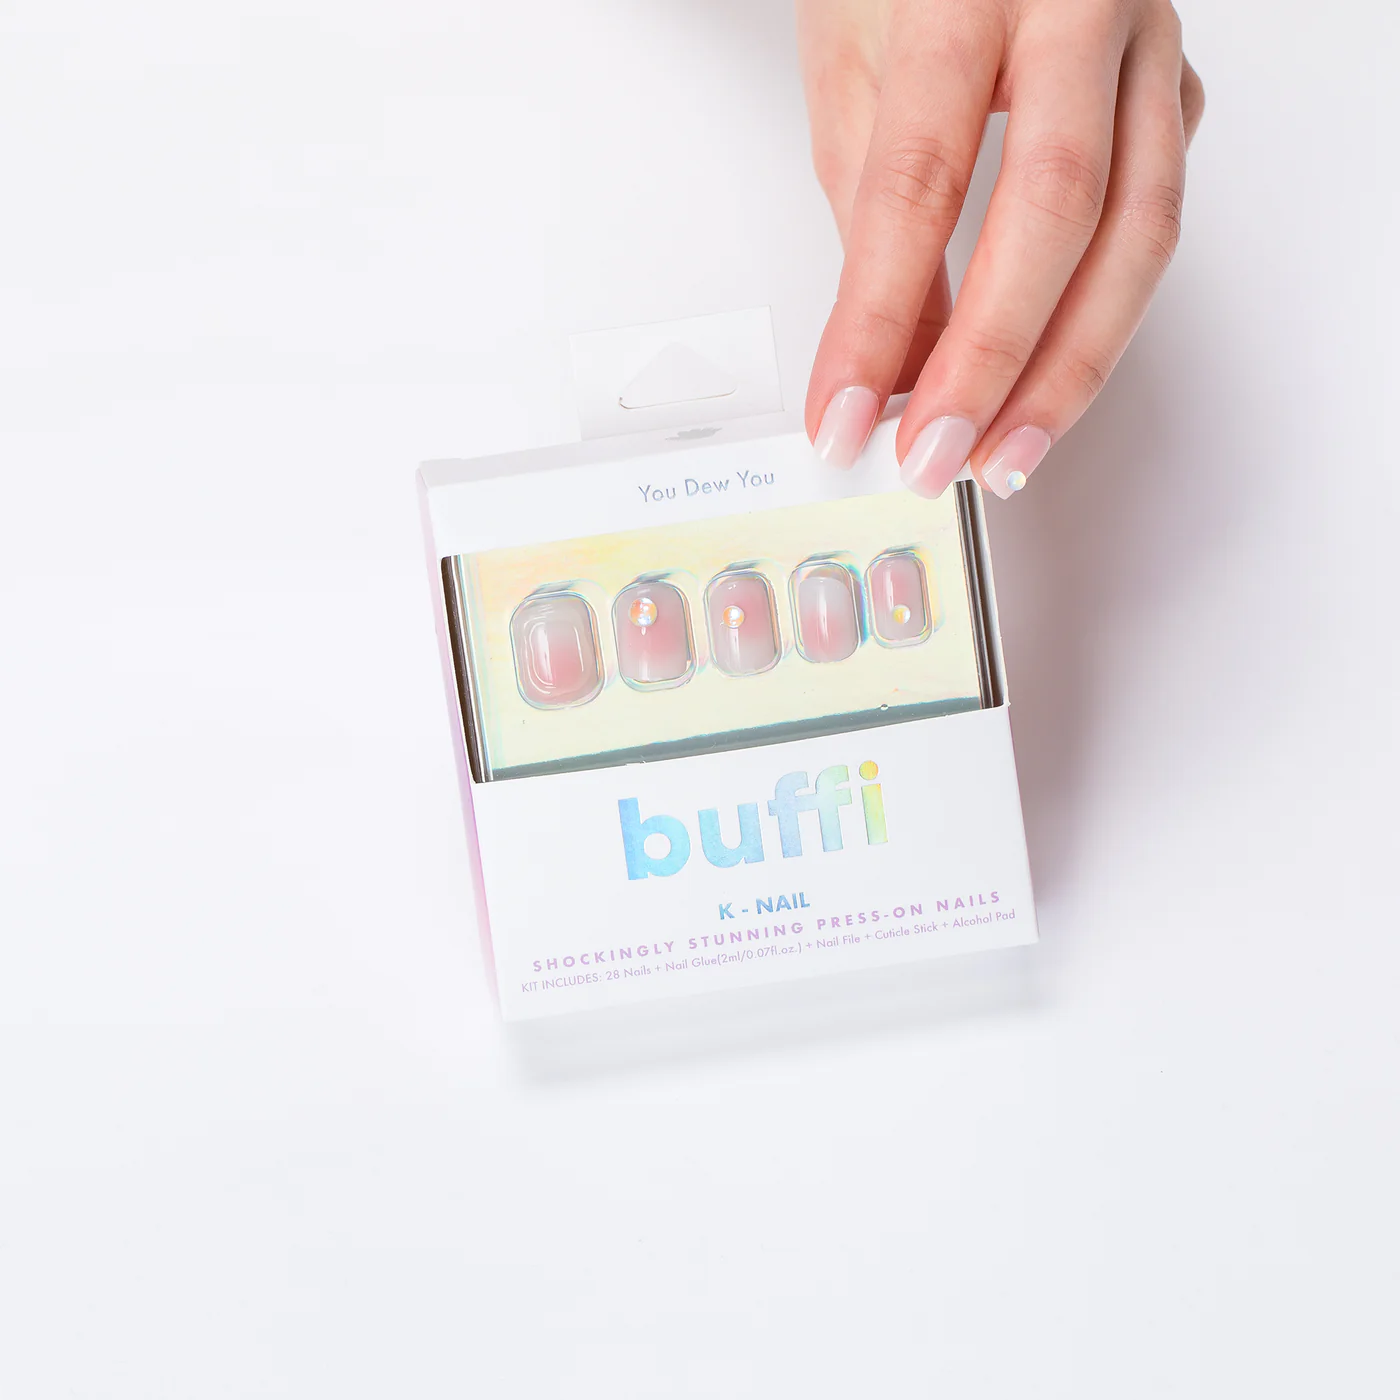 Kara Beauty - Buffi Press On Nails You Dew You